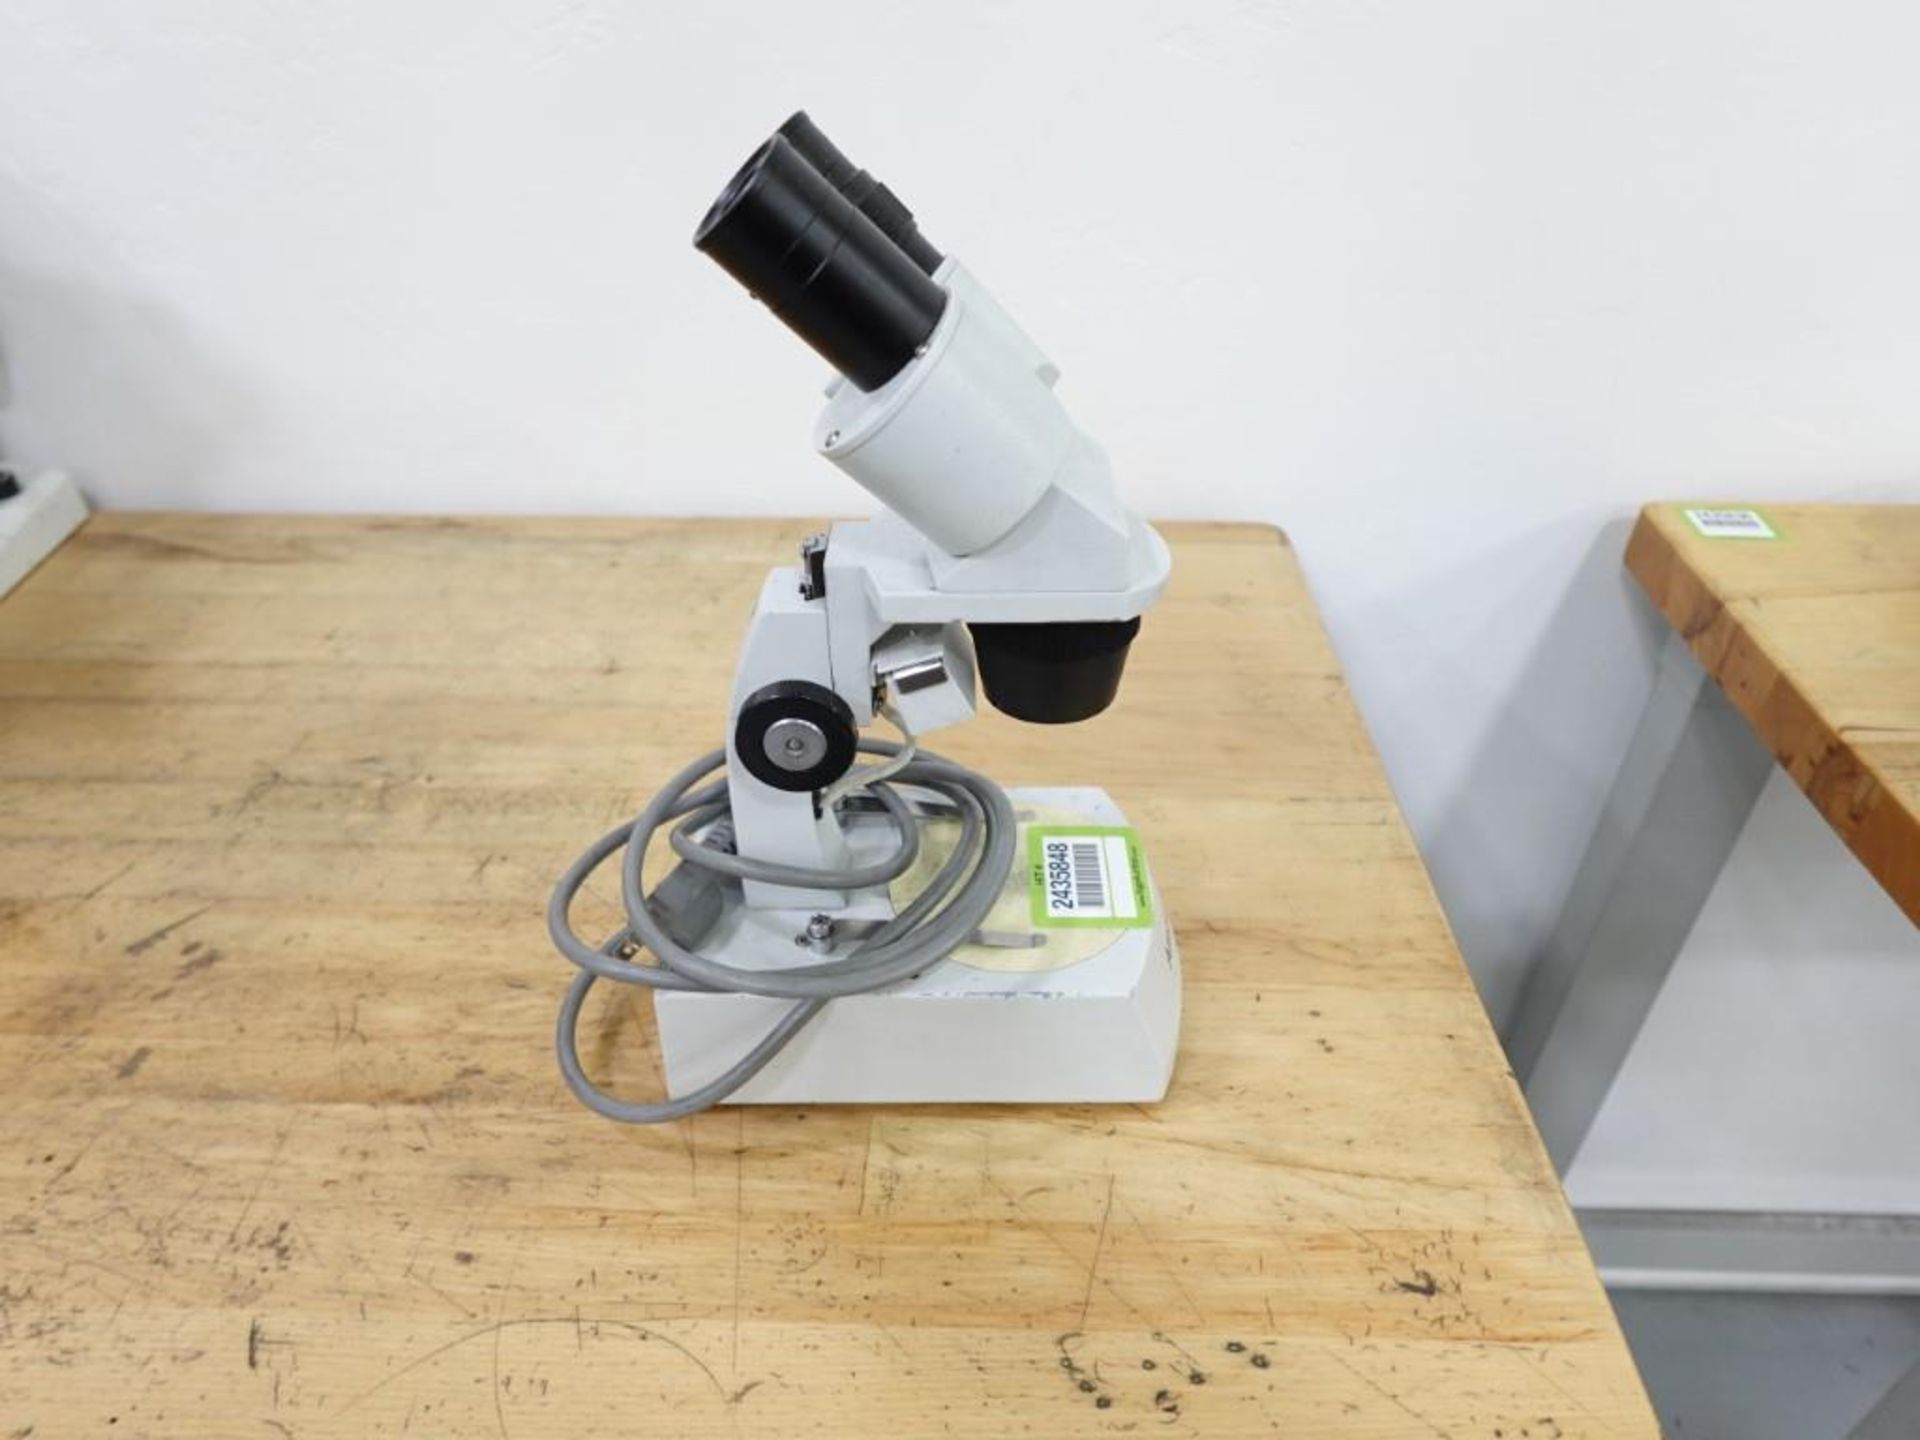 Amscope Stereo Microscope - Image 4 of 4